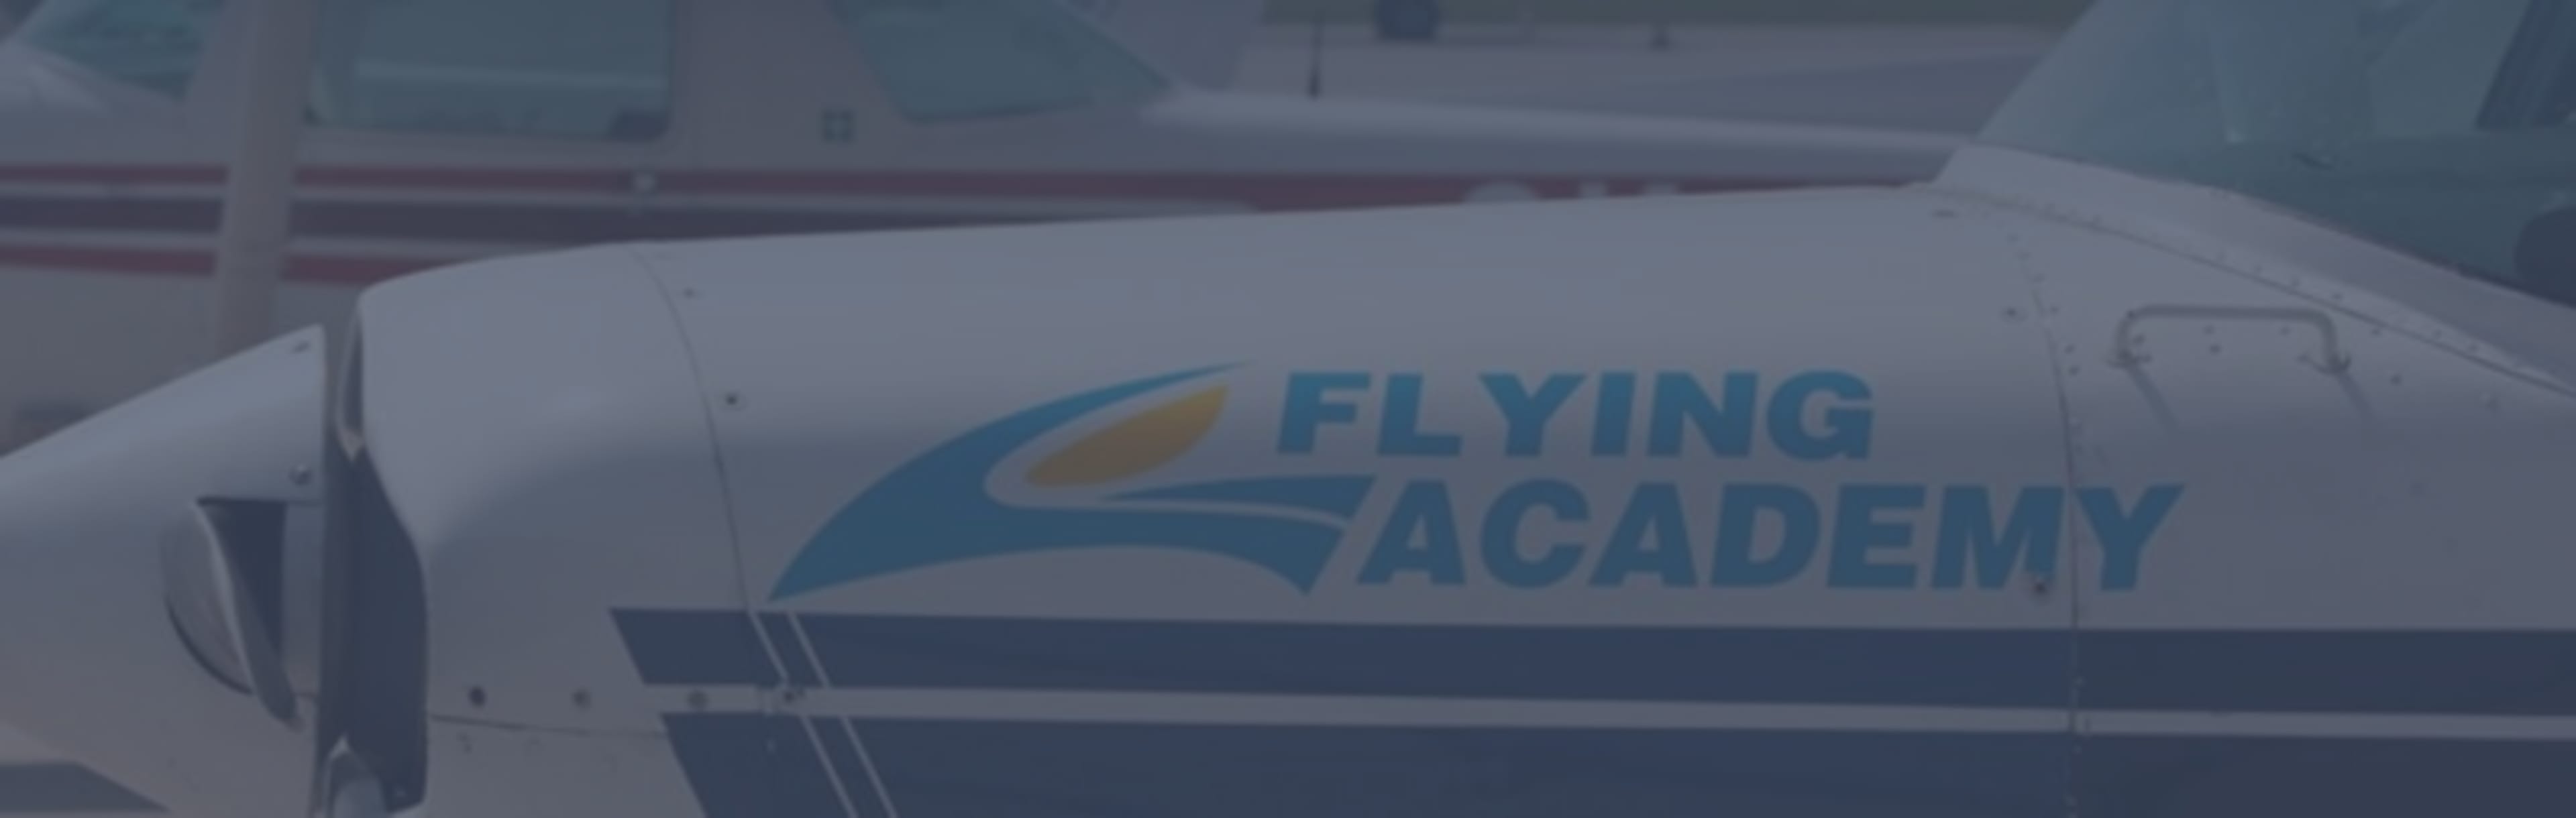 Flying Academy AESA piloto comercial de 0 a ATPL